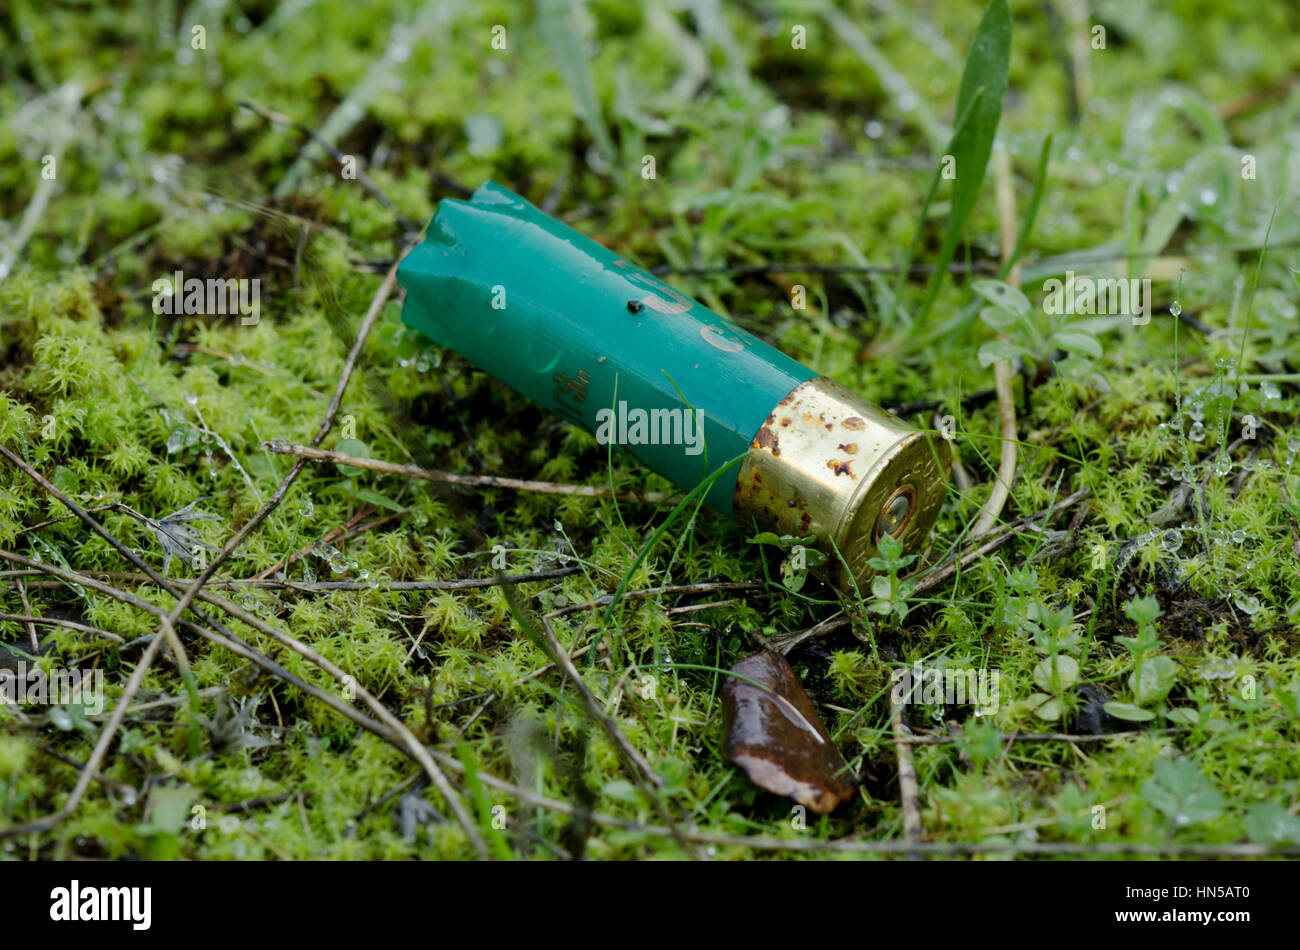 Svuotare i serbatoi fucile cartuccia di munizioni lasciati da cacciatori in campagna, Spagna Foto Stock